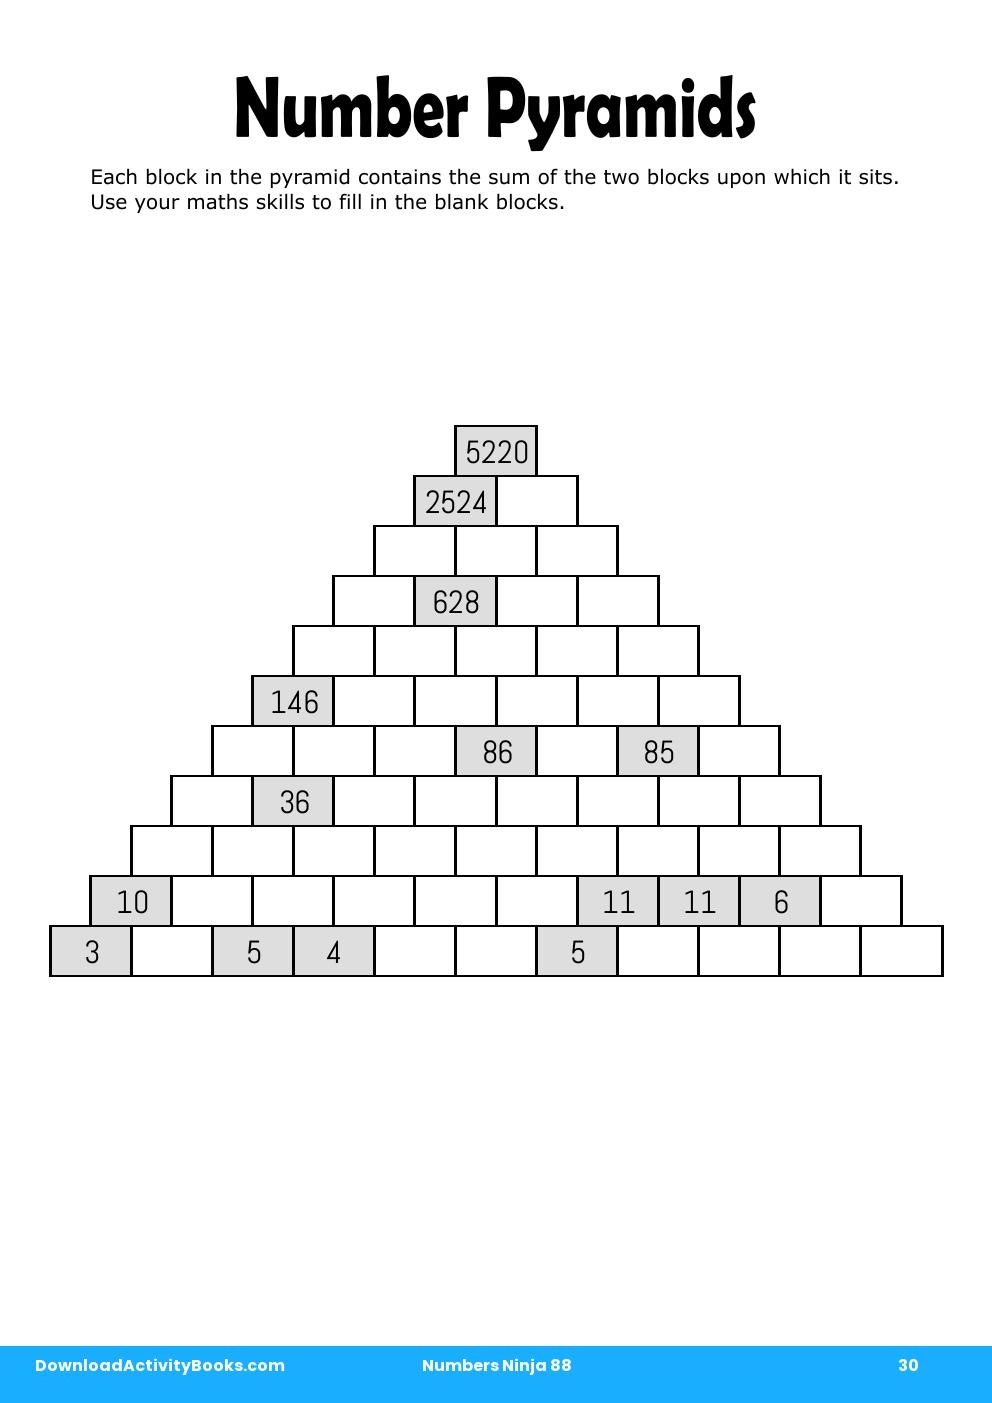 Number Pyramids in Numbers Ninja 88